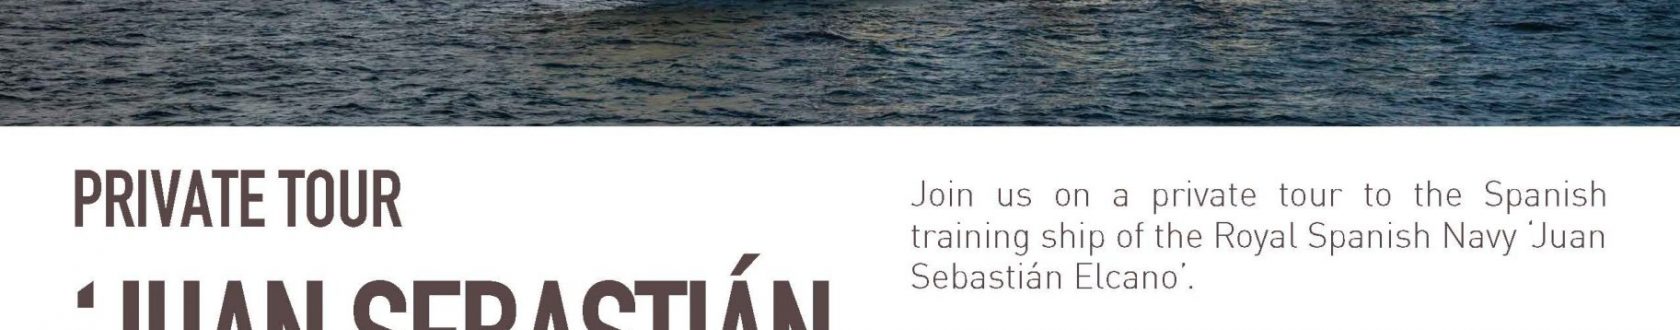 Private Tour to ‘Juan Sebastián Elcano’ training ship in Miami (1)